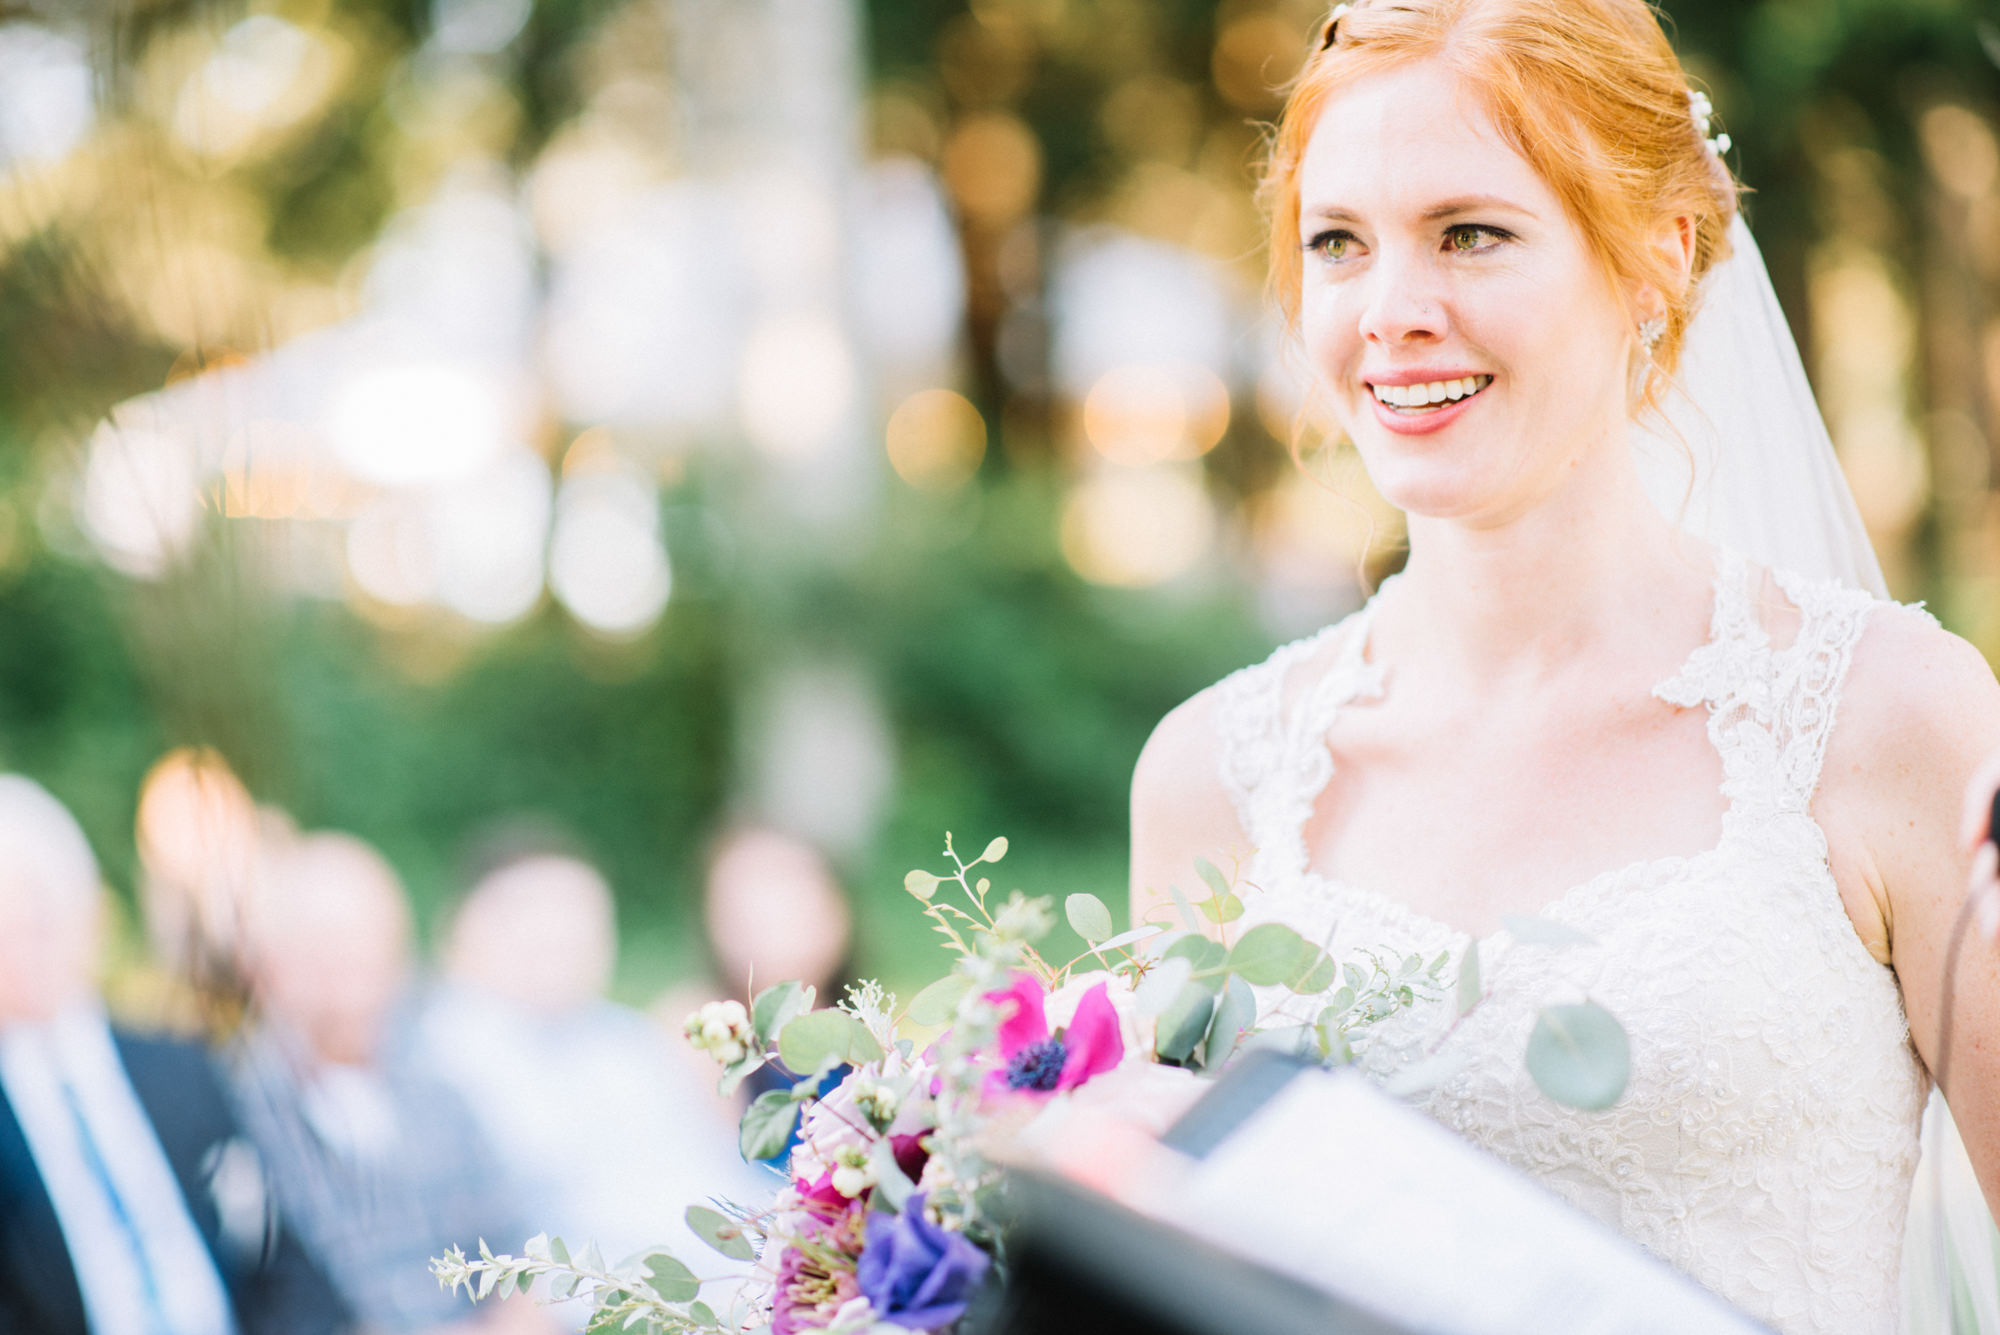 Katherine gets emotional at her wedding ceremony at Kingston House, WA. September 2016.